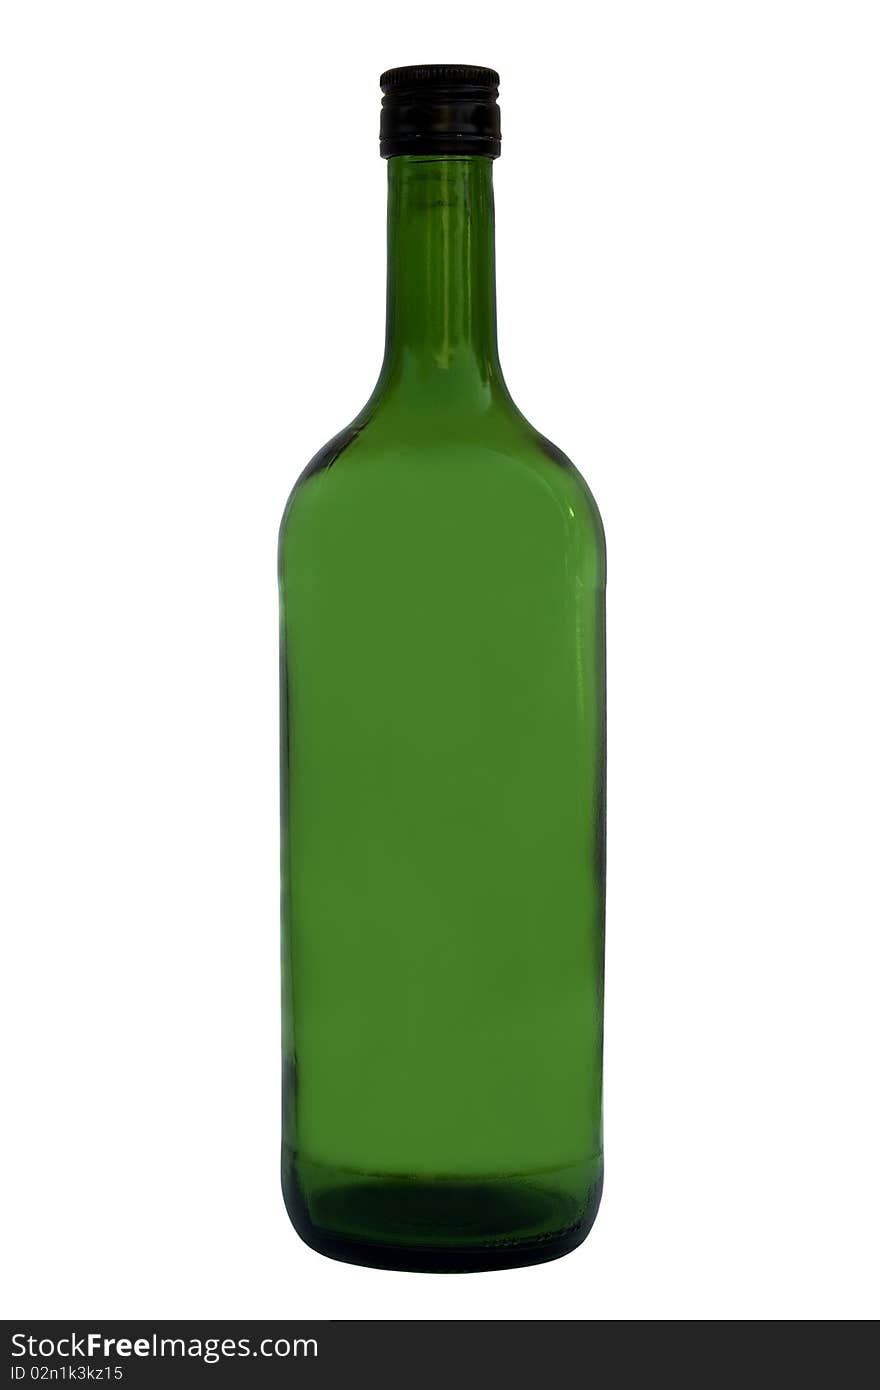 Green empty wine bottle isolated on white background